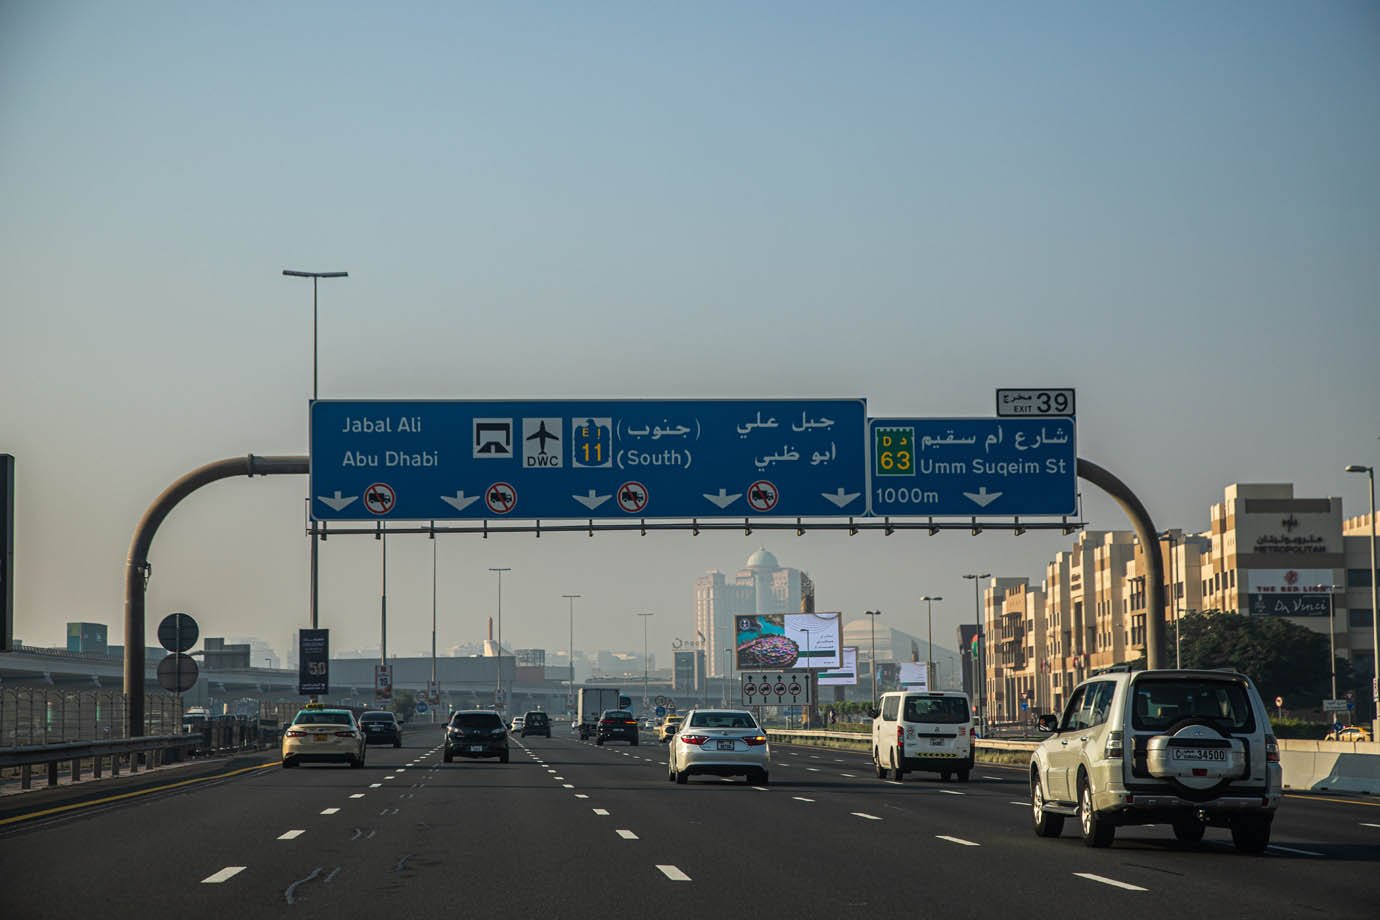 Rodovia de Dubai

Foto: Leandro Fonseca
Data: dezembro 2023